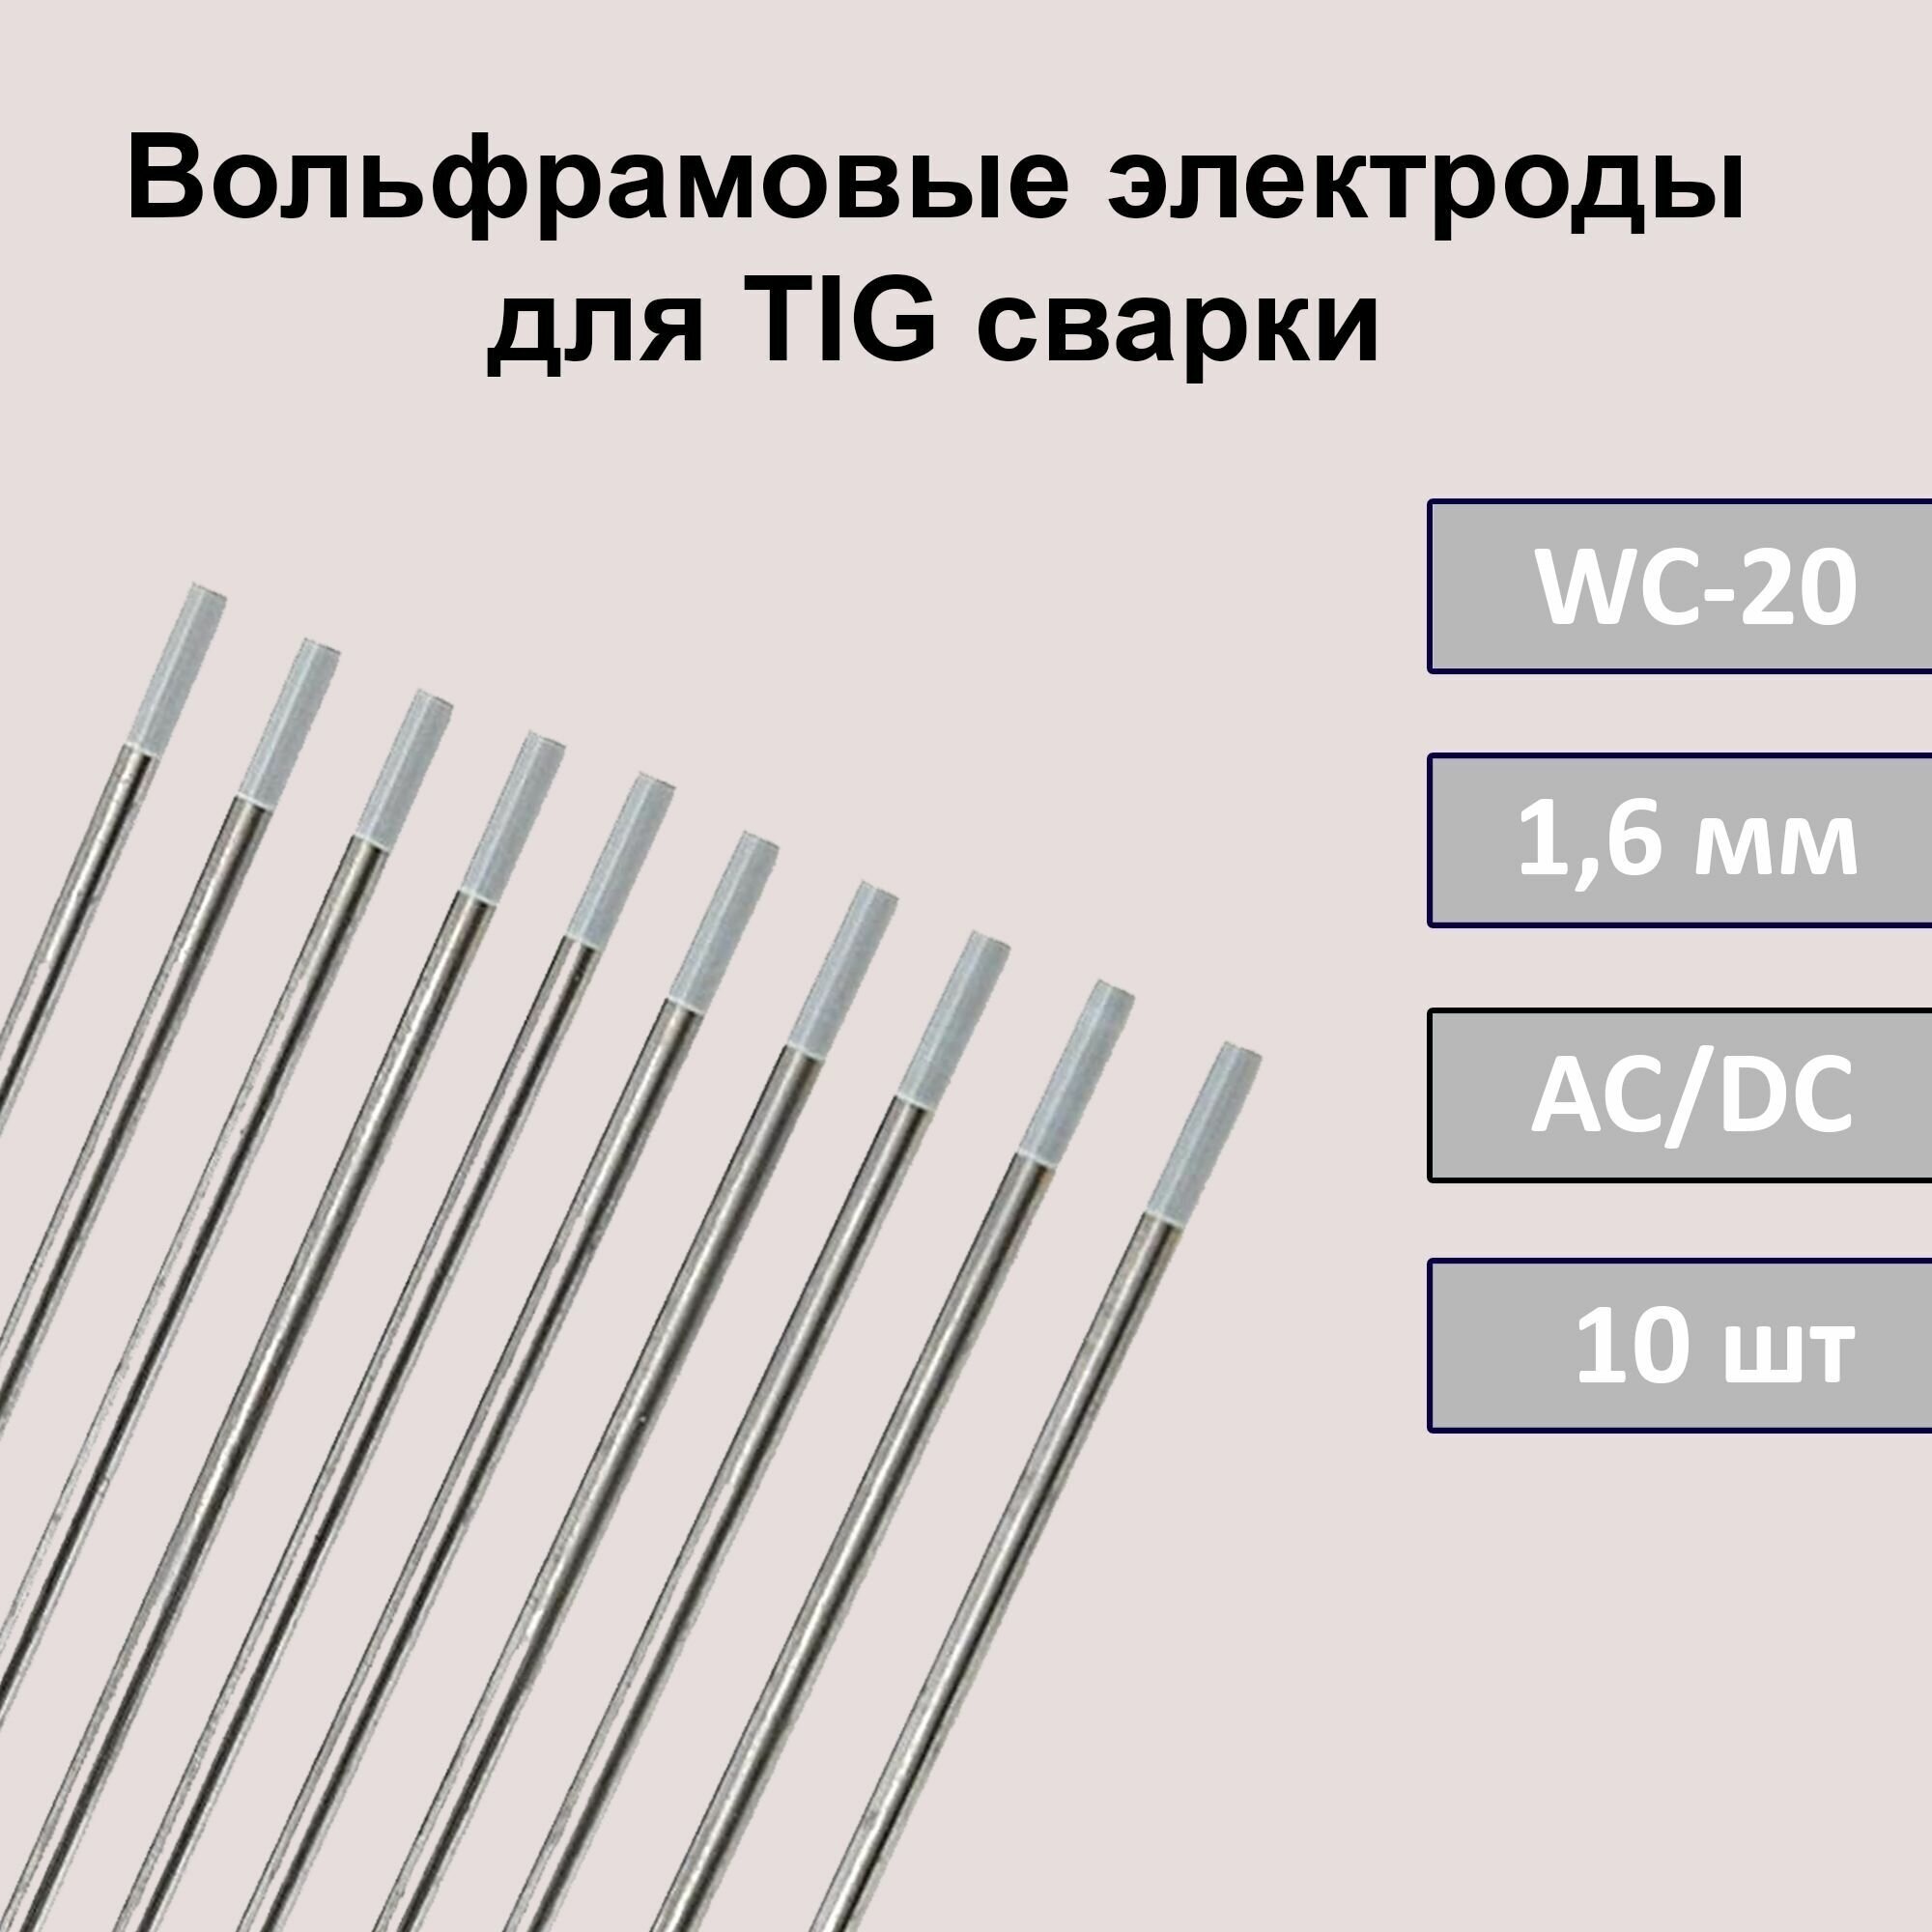 Вольфрамовые электроды для TIG сварки WC-20 1,6 мм 175 мм (серый) (10шт)